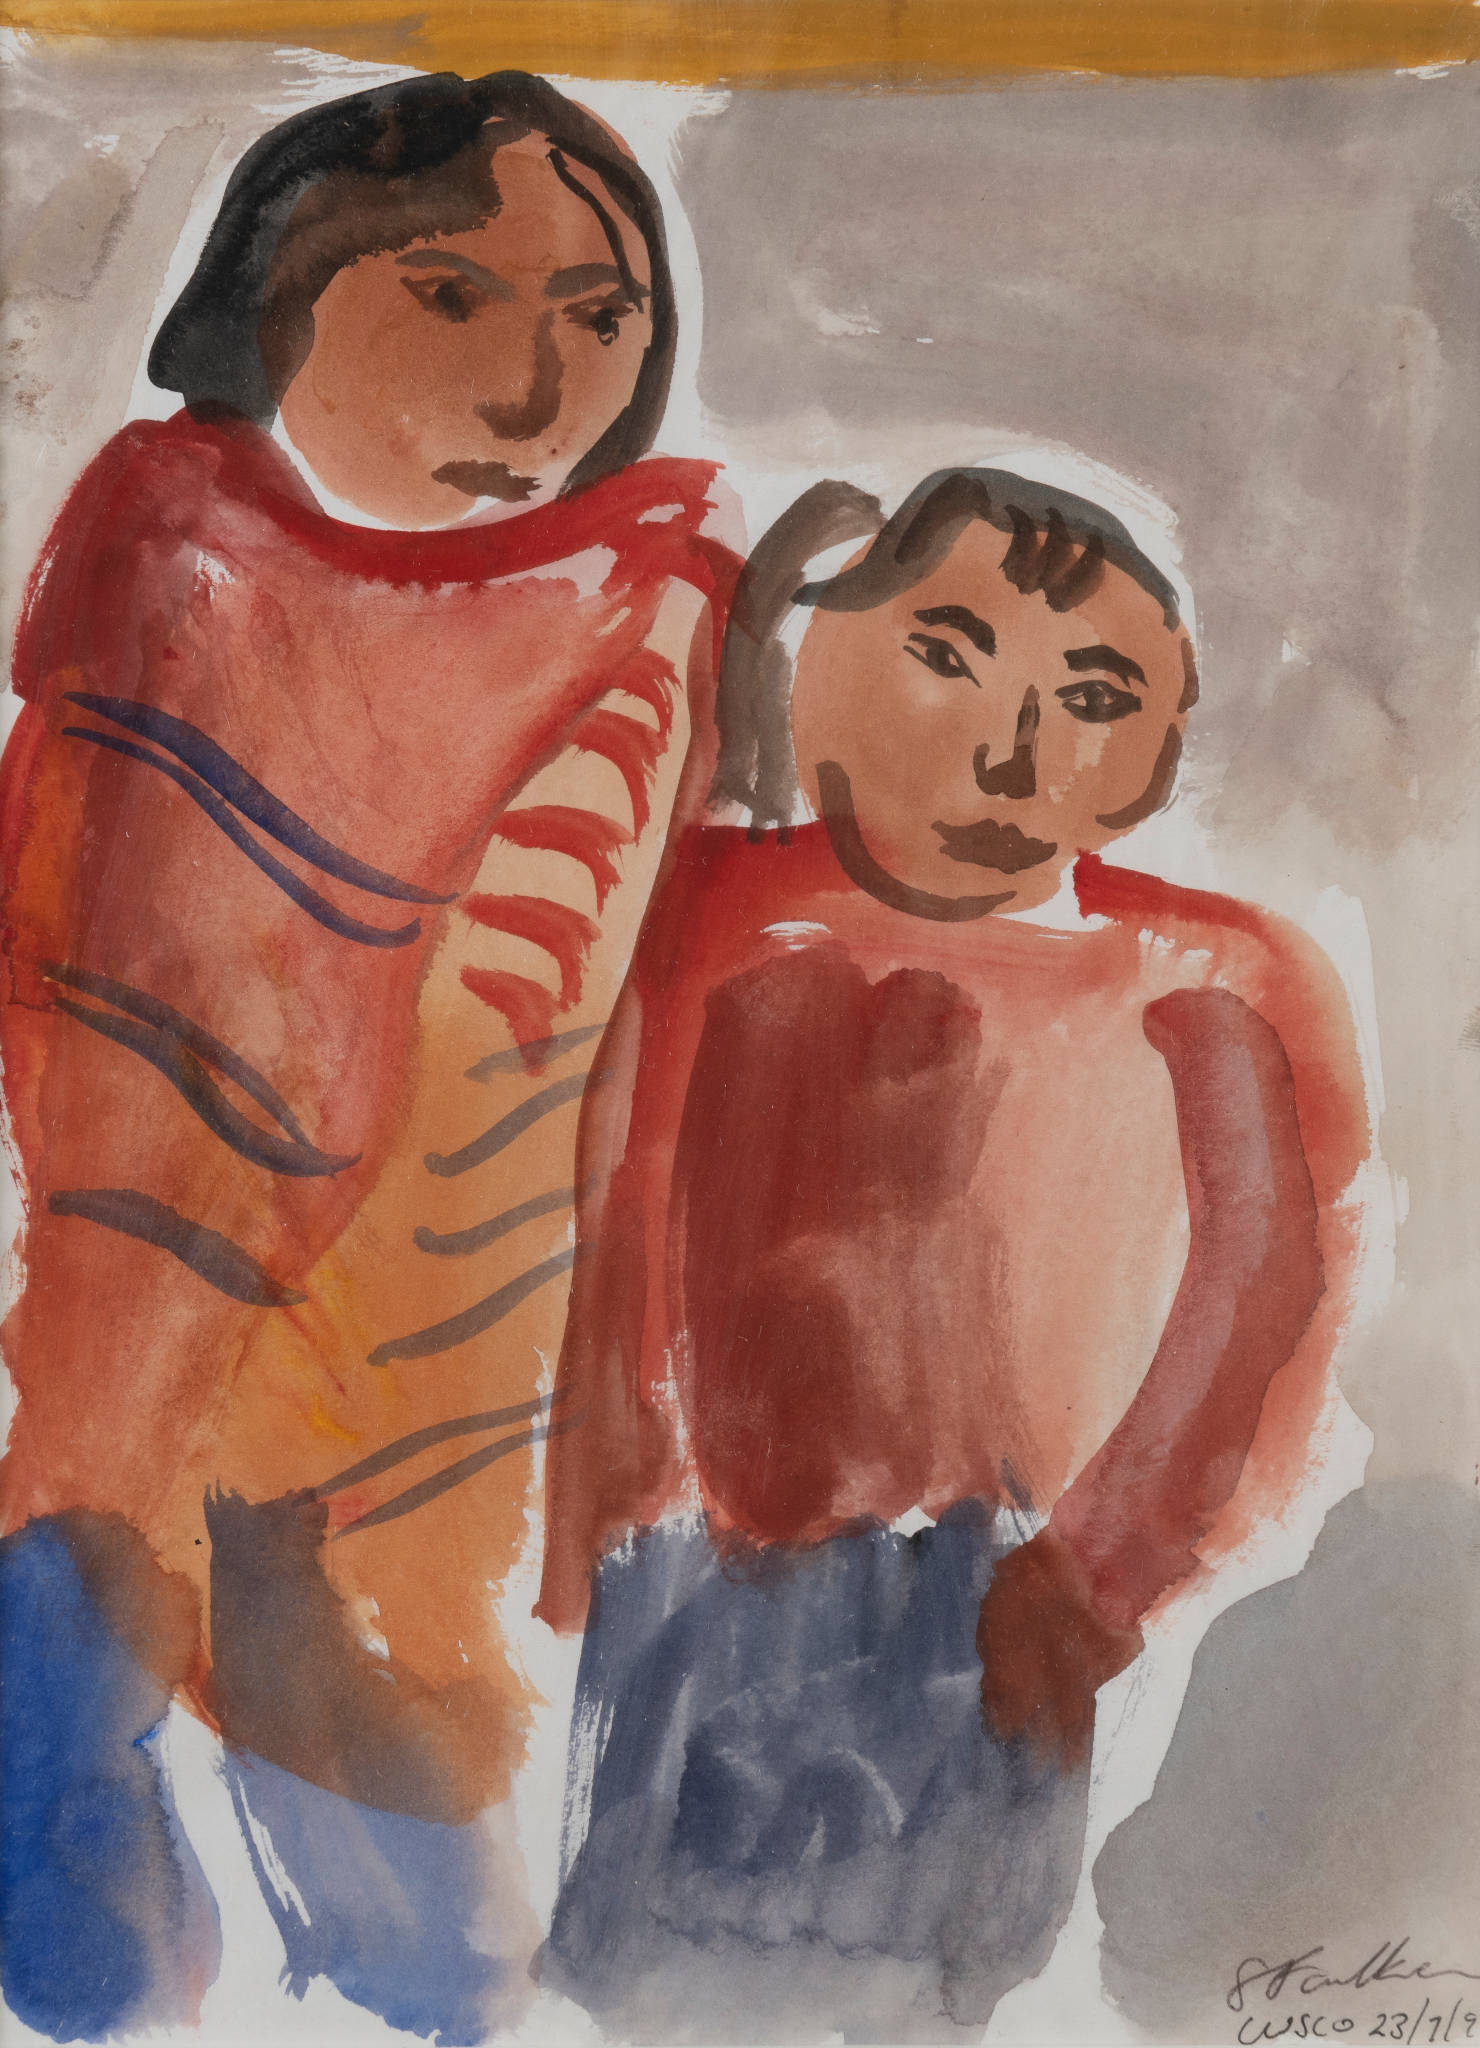 Sarah Faulkner 'Children, Cuzco' - collected by Melvin